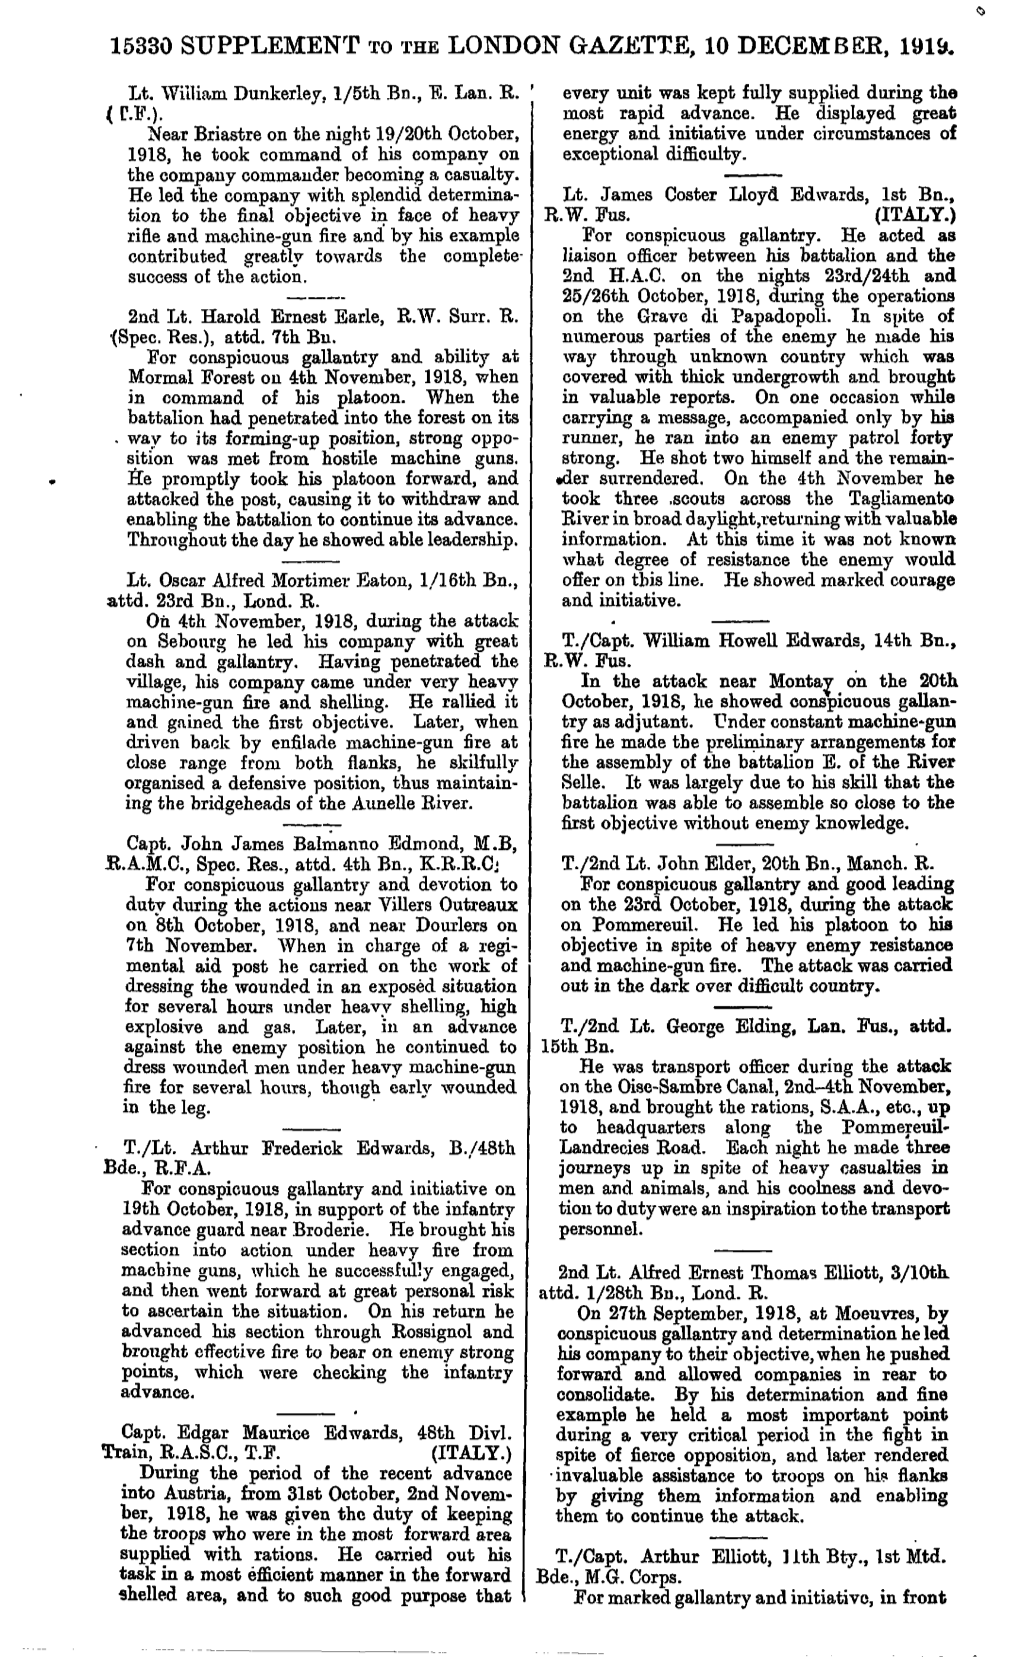 15330 Supplement to the London Gazette, 10 Decembee, 1919